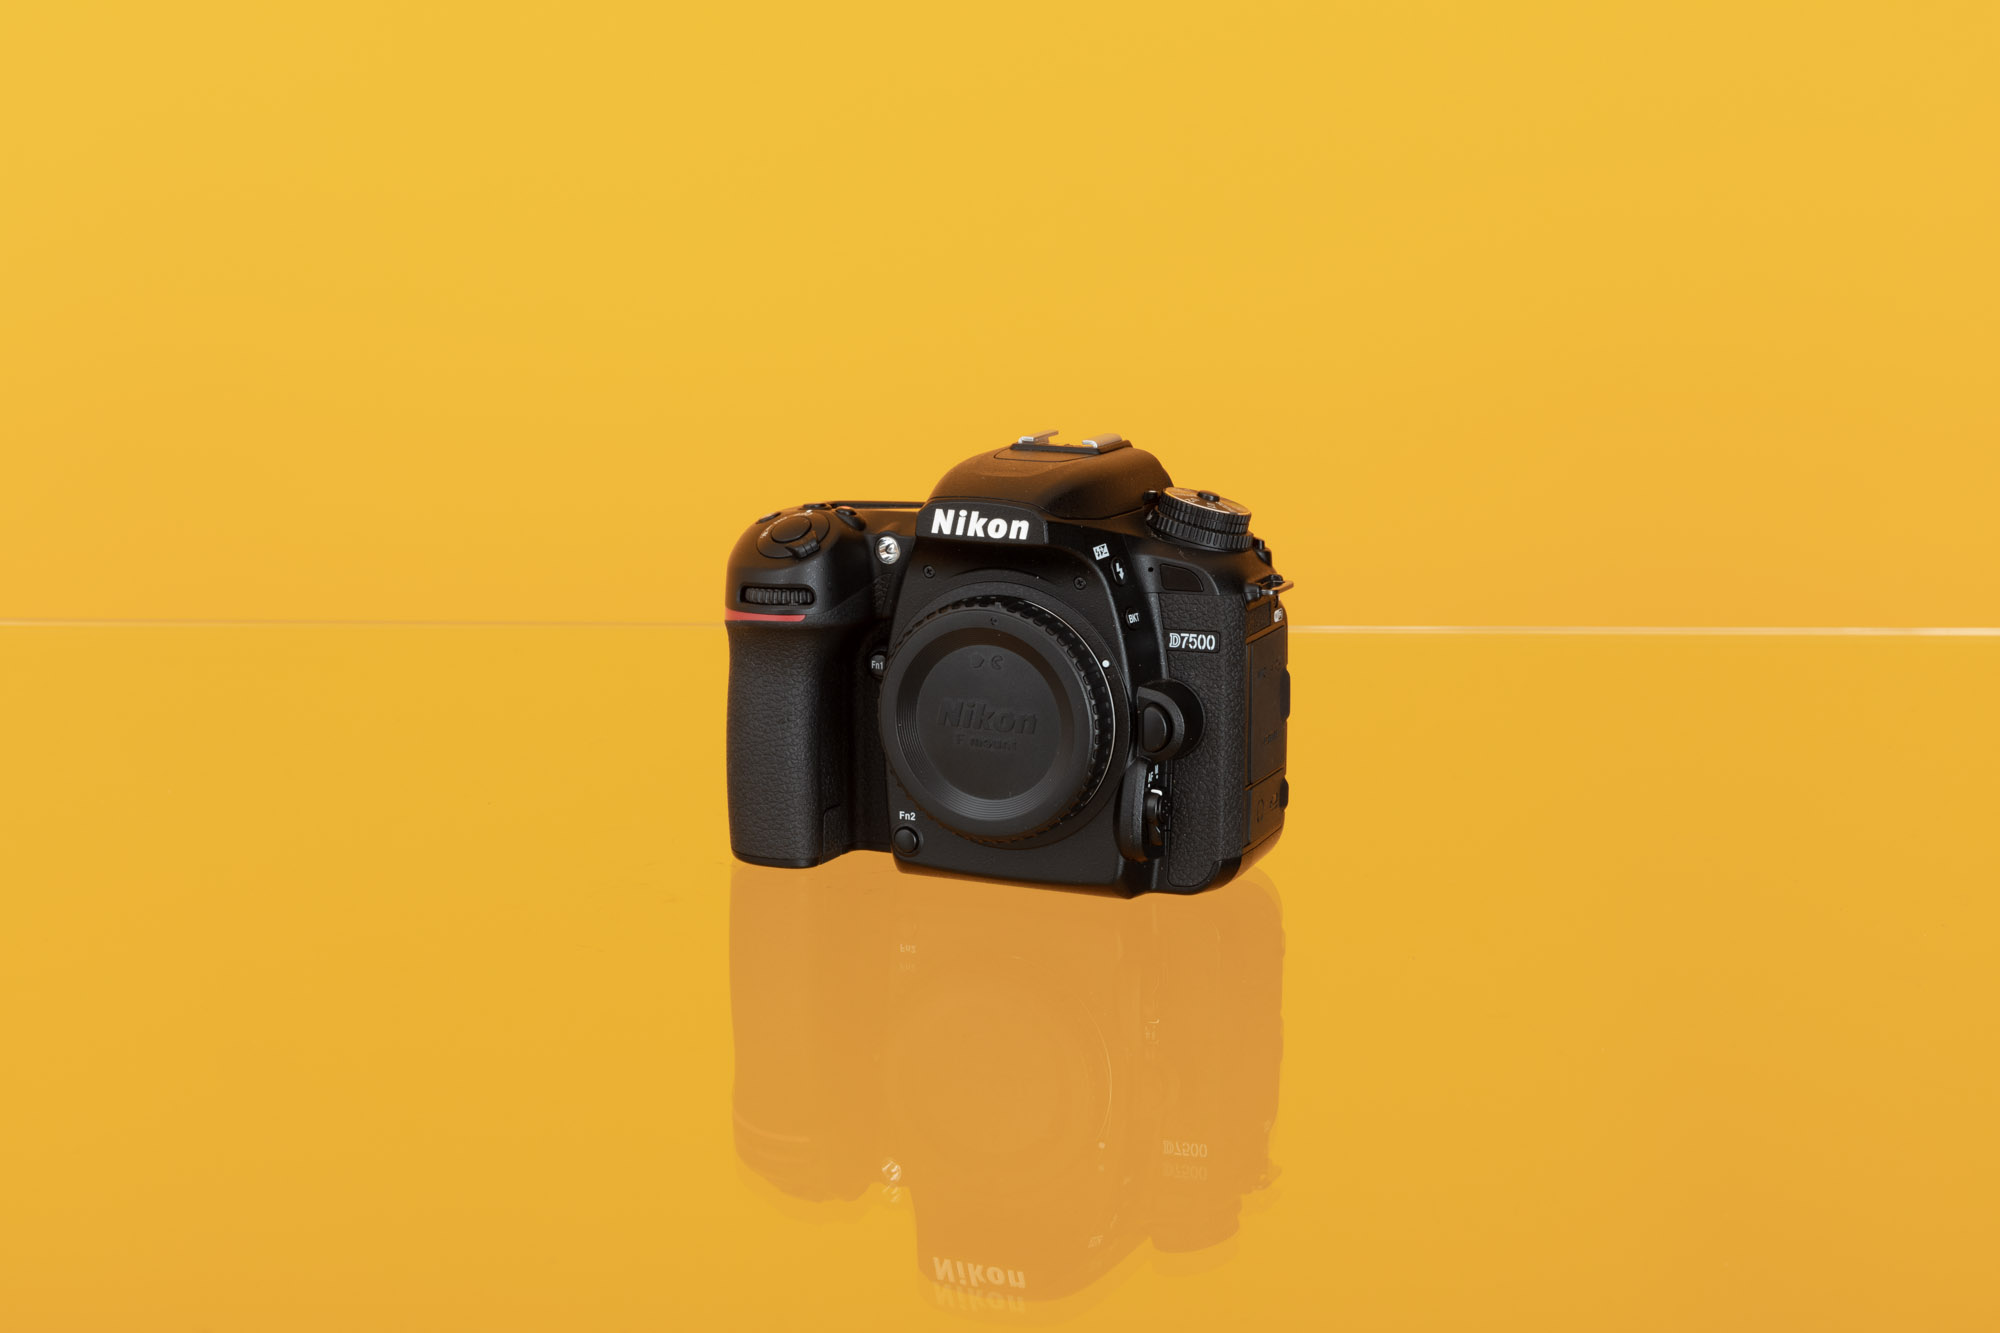 Nikon D7500 DSLR Camera Specifications